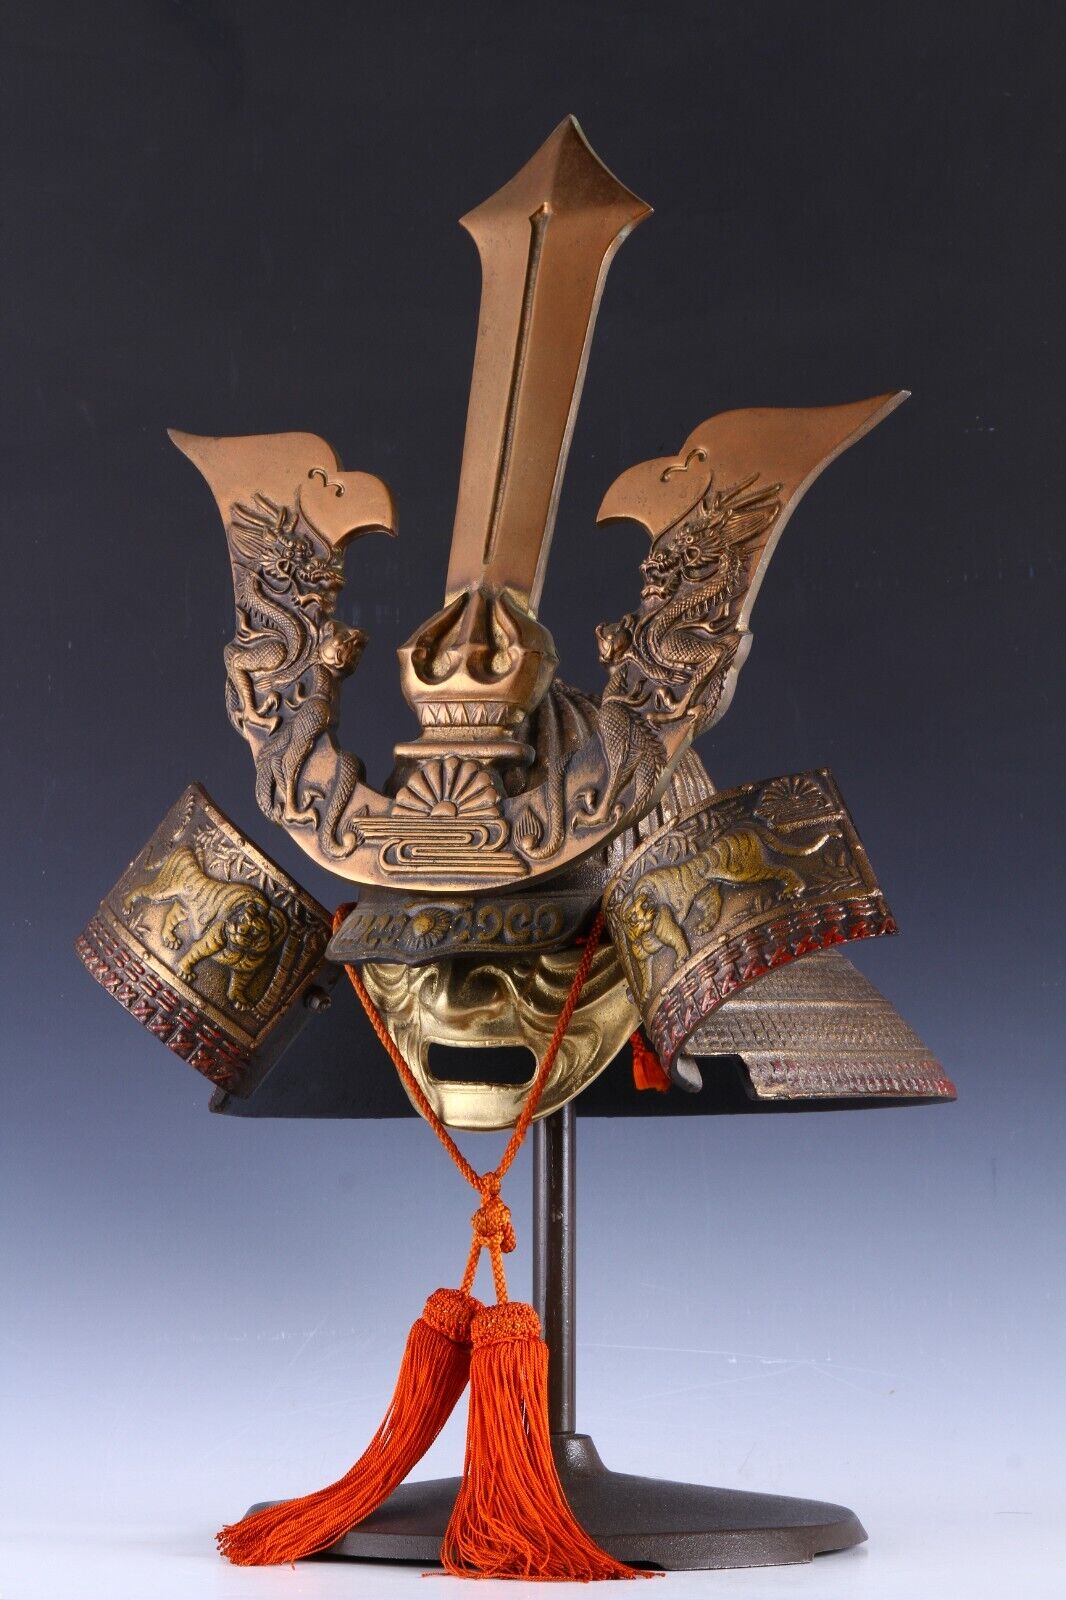 Old Samurai Japan Metal Kabuto Helmet - Dragon Helmet with a Mask